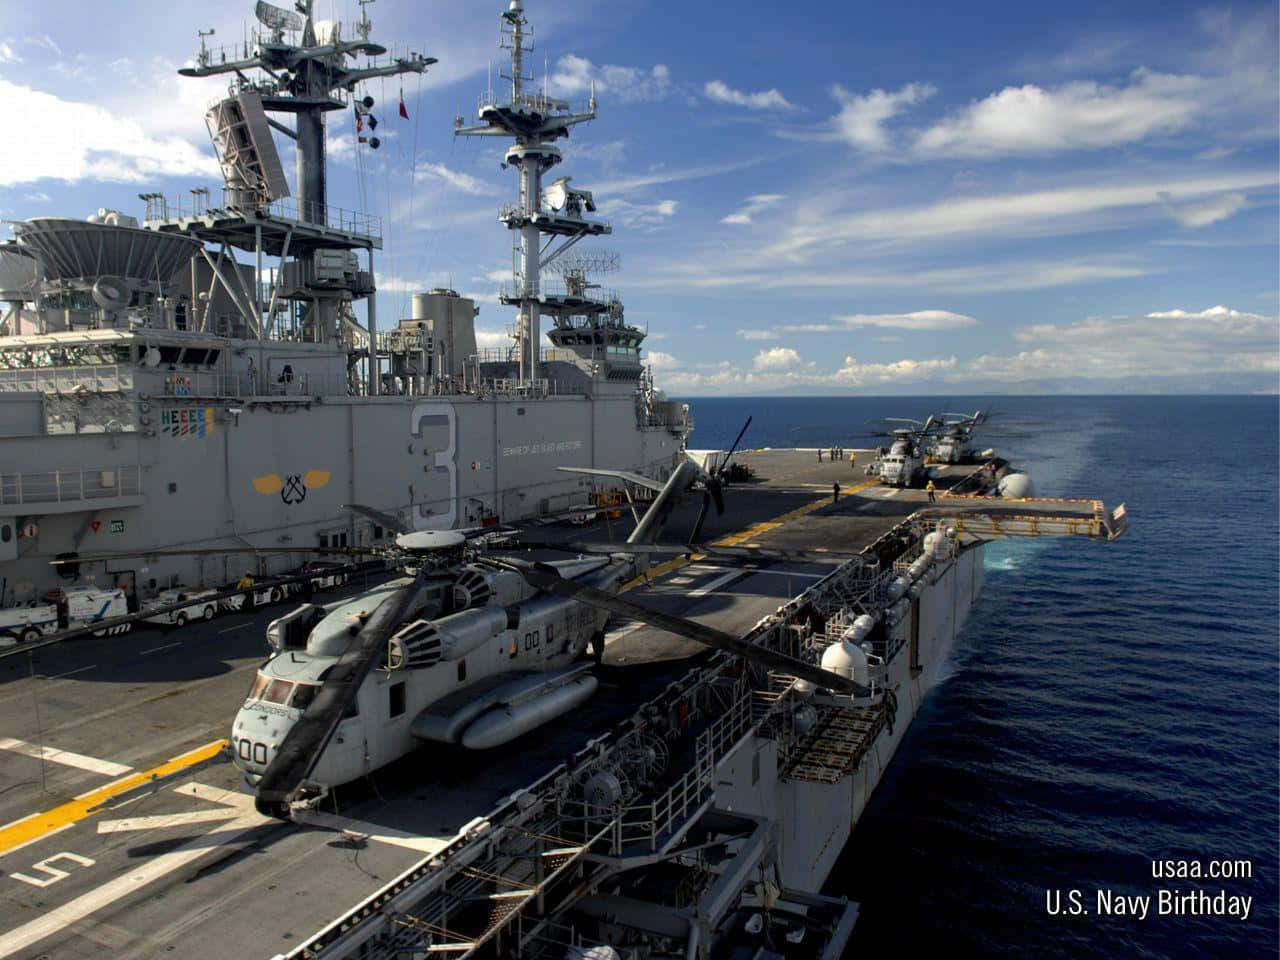 U.S. Navy at its Finest